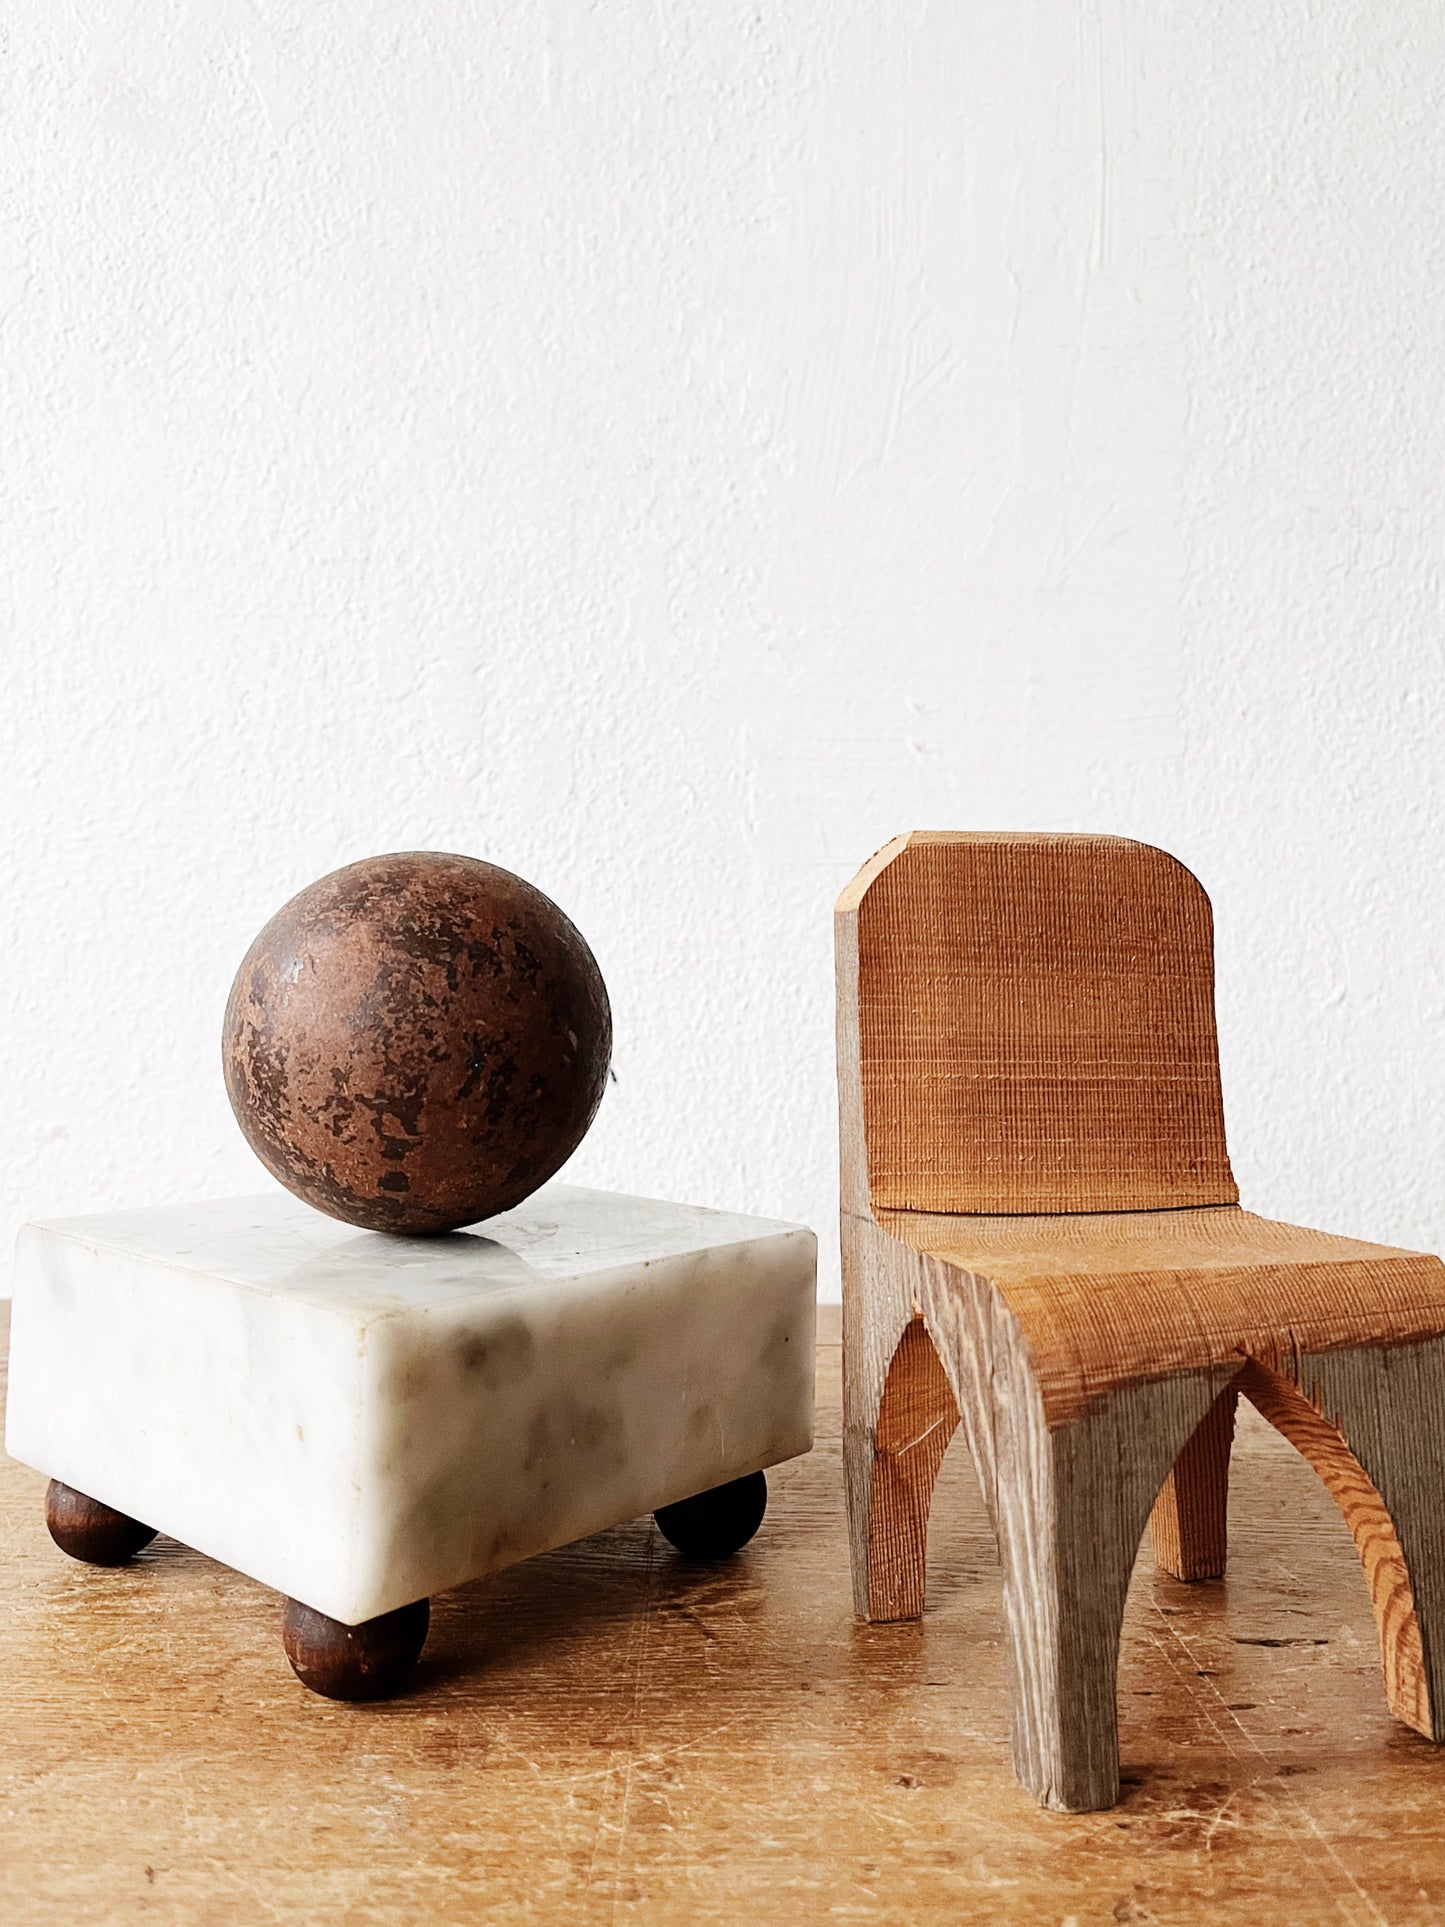 Vintage Gustavian Folk Chair Model